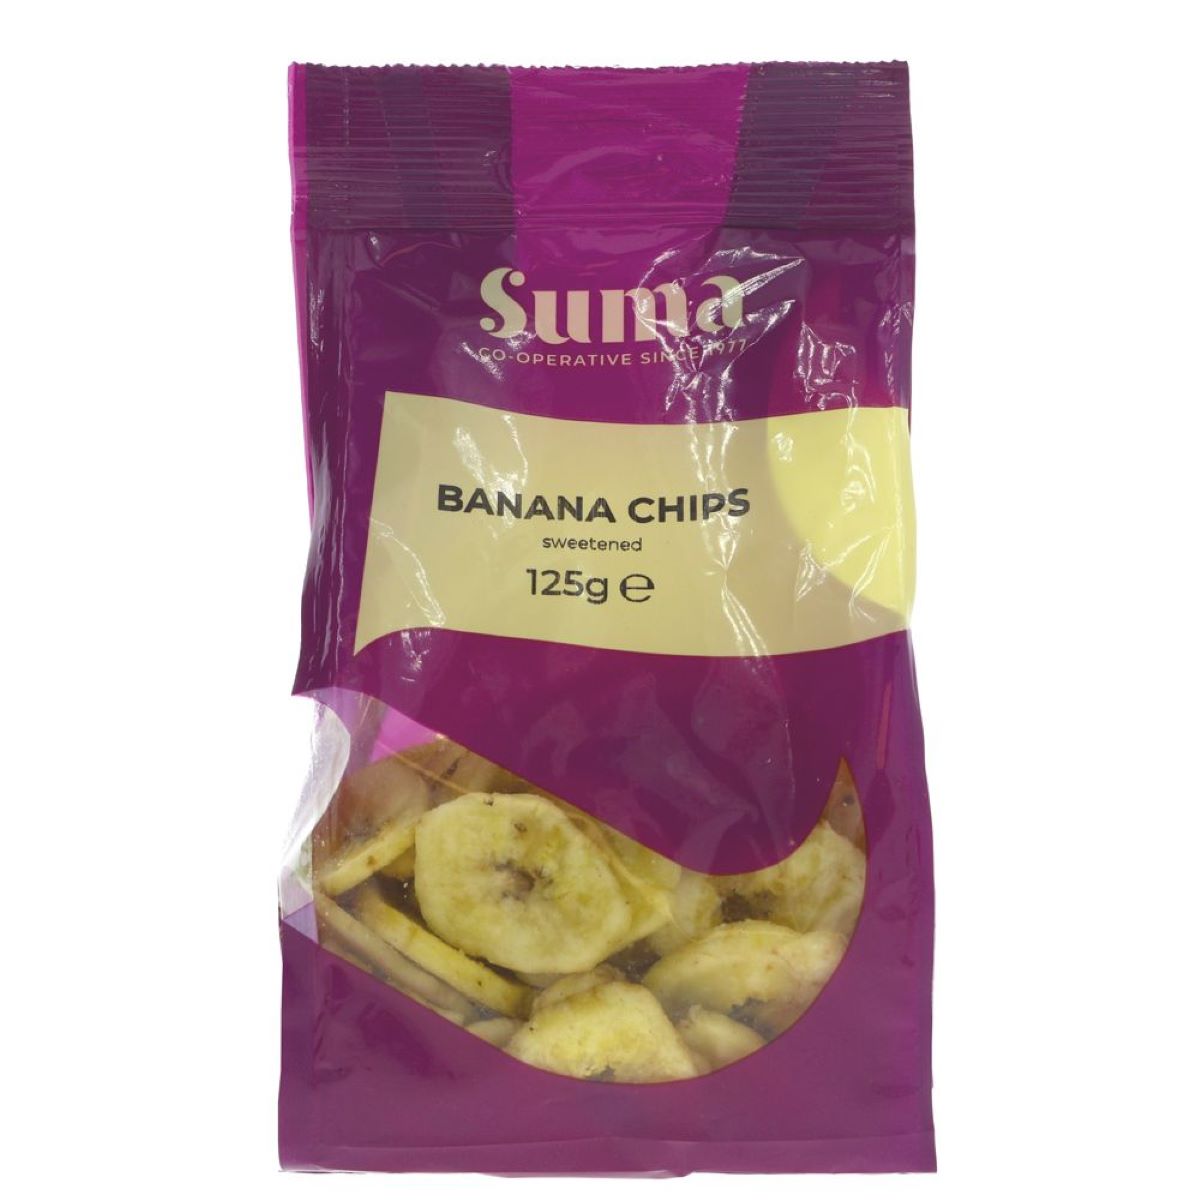 Suma- Banana Chips 125g